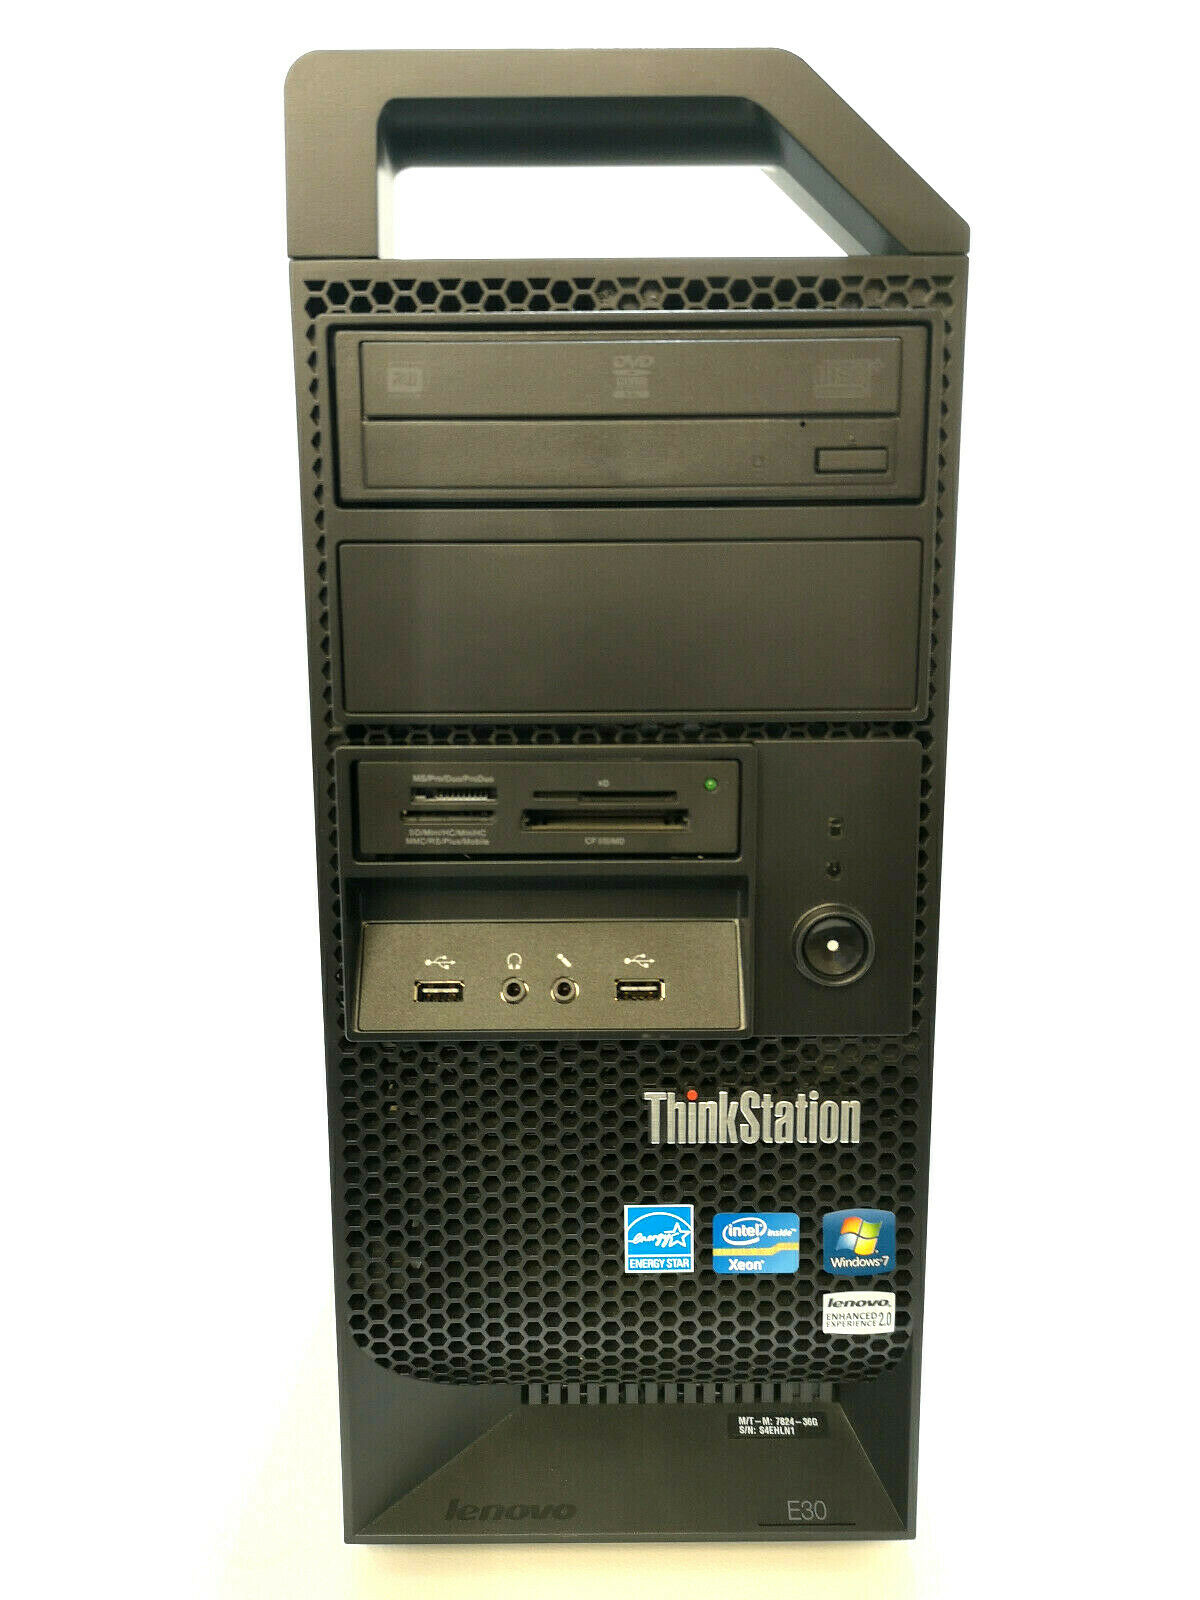 Refurbished Lenovo Think Station E30 Desktop Tower PC